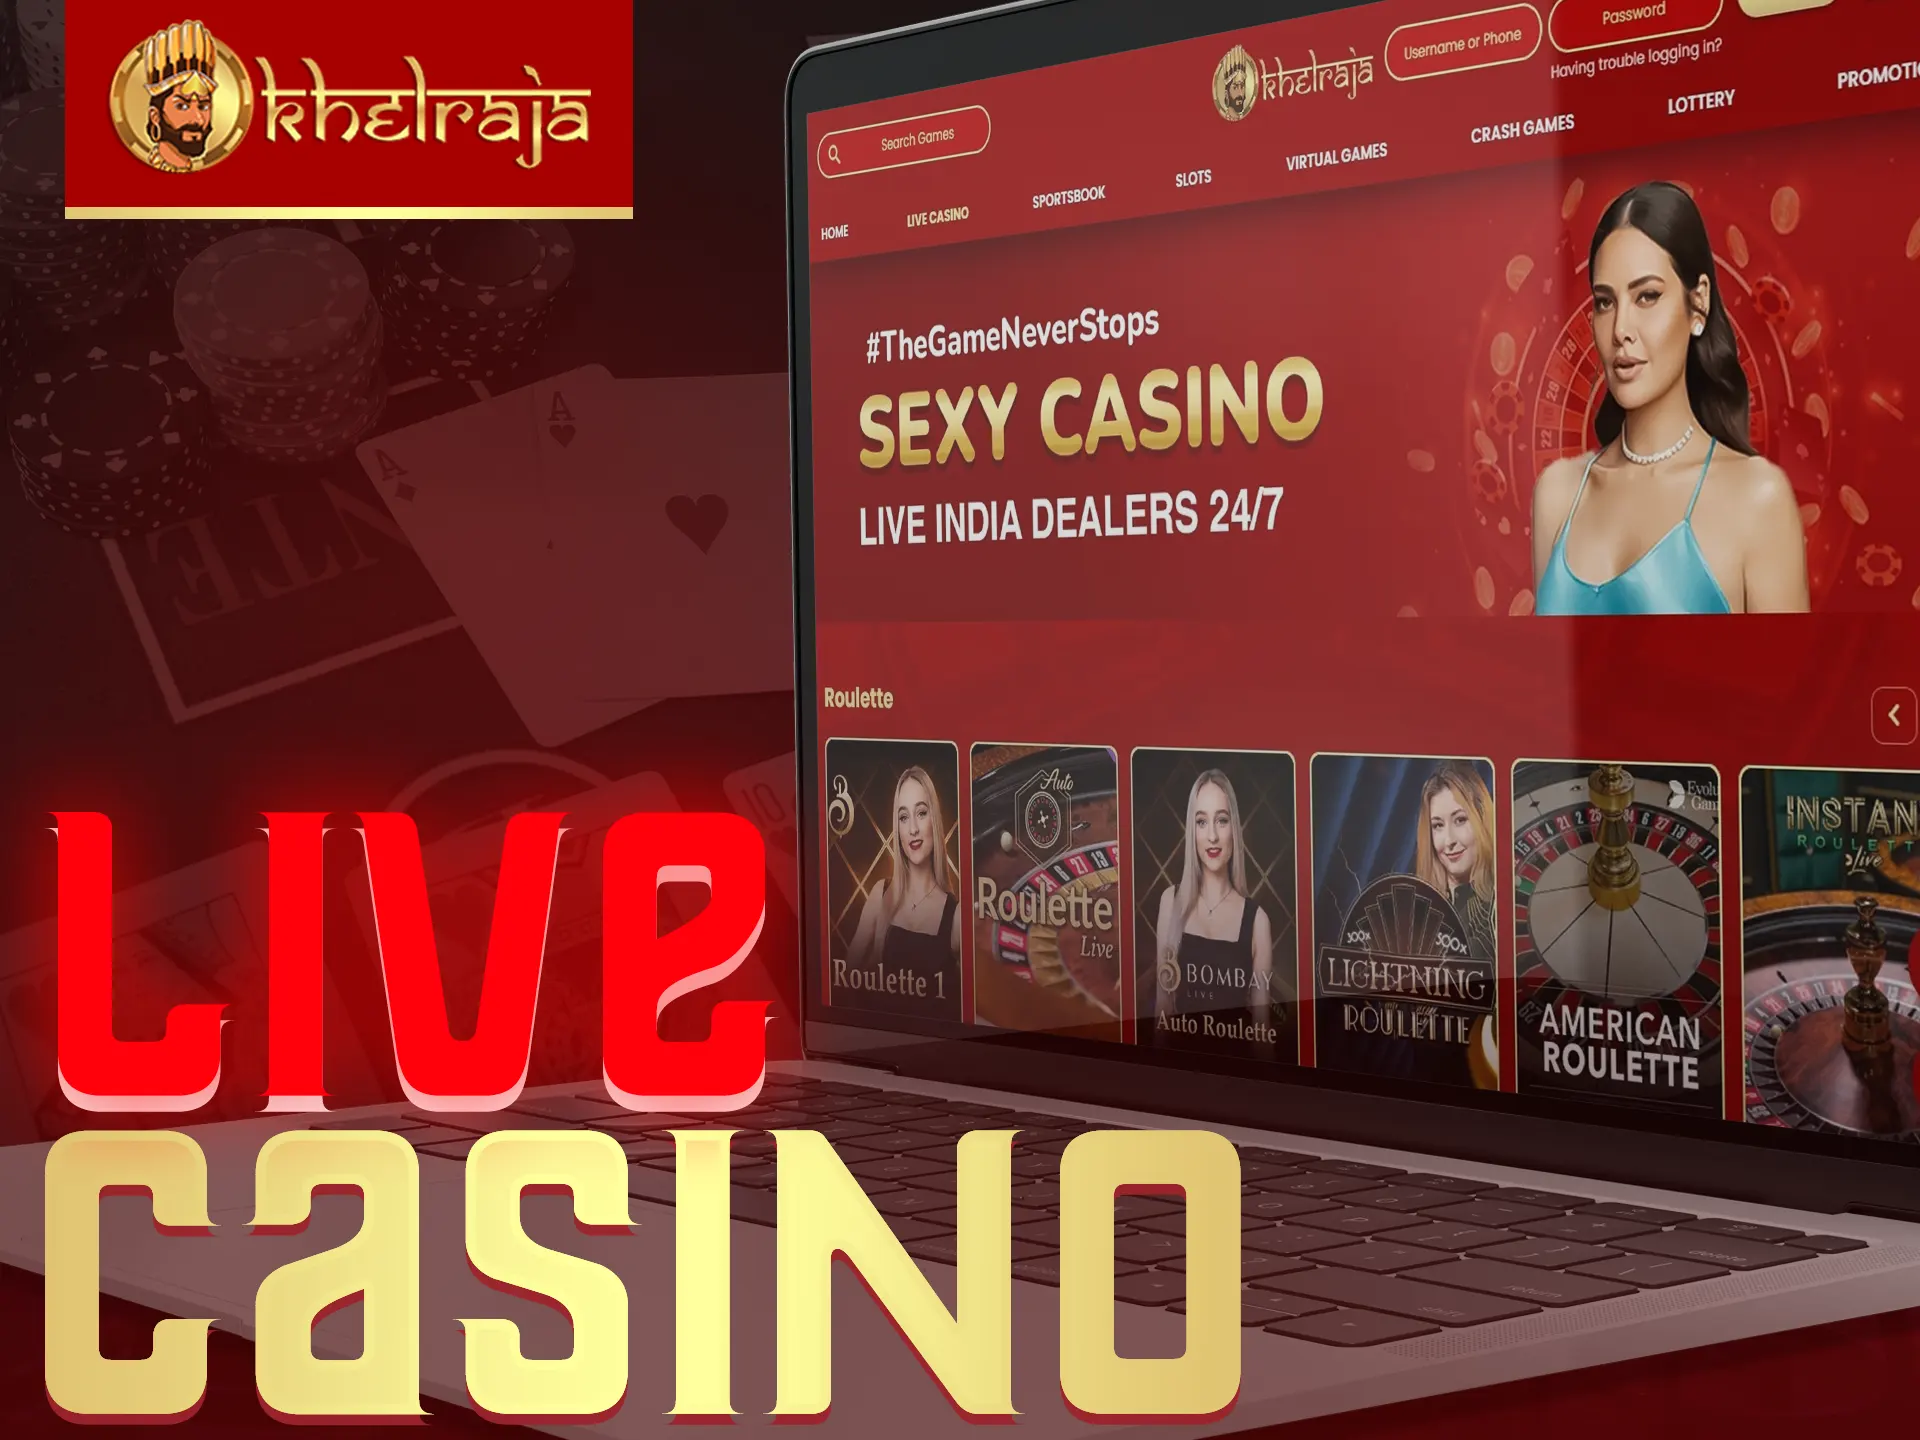 Khelraja's Live Casino offers immersive gaming with bonuses.